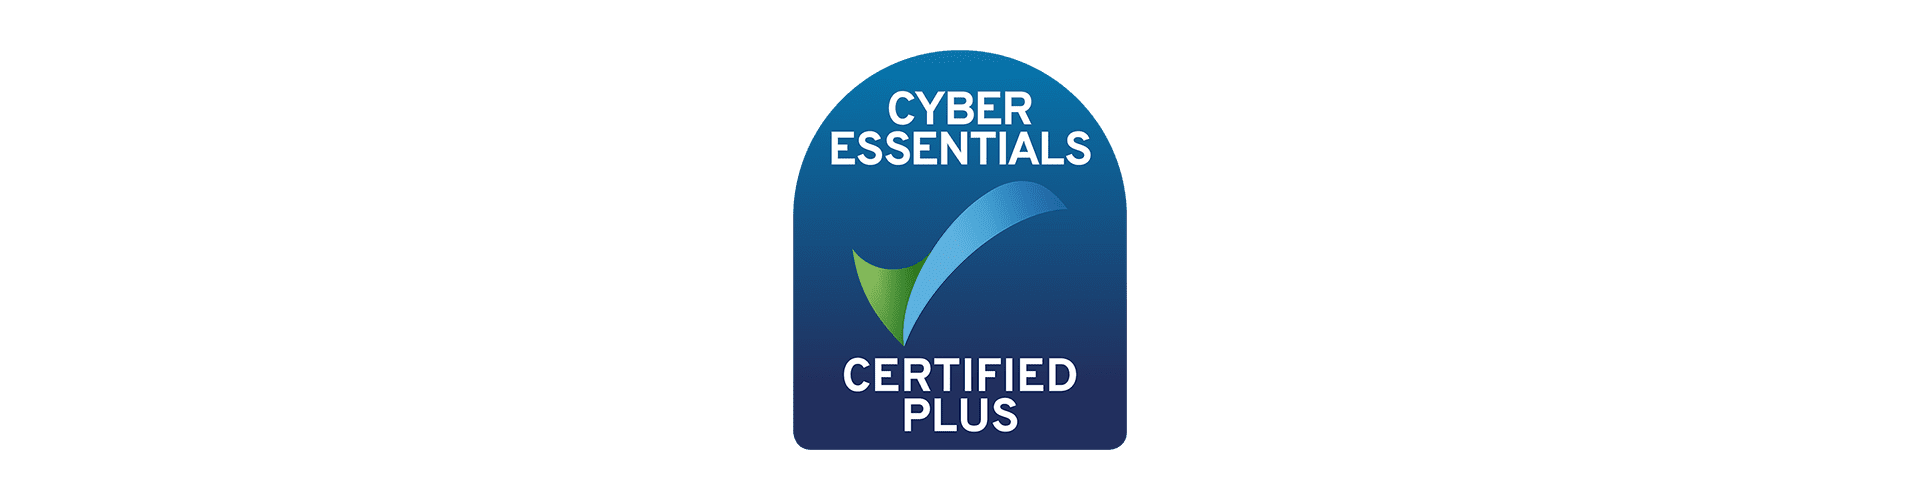 cyber essentials certified plus logo